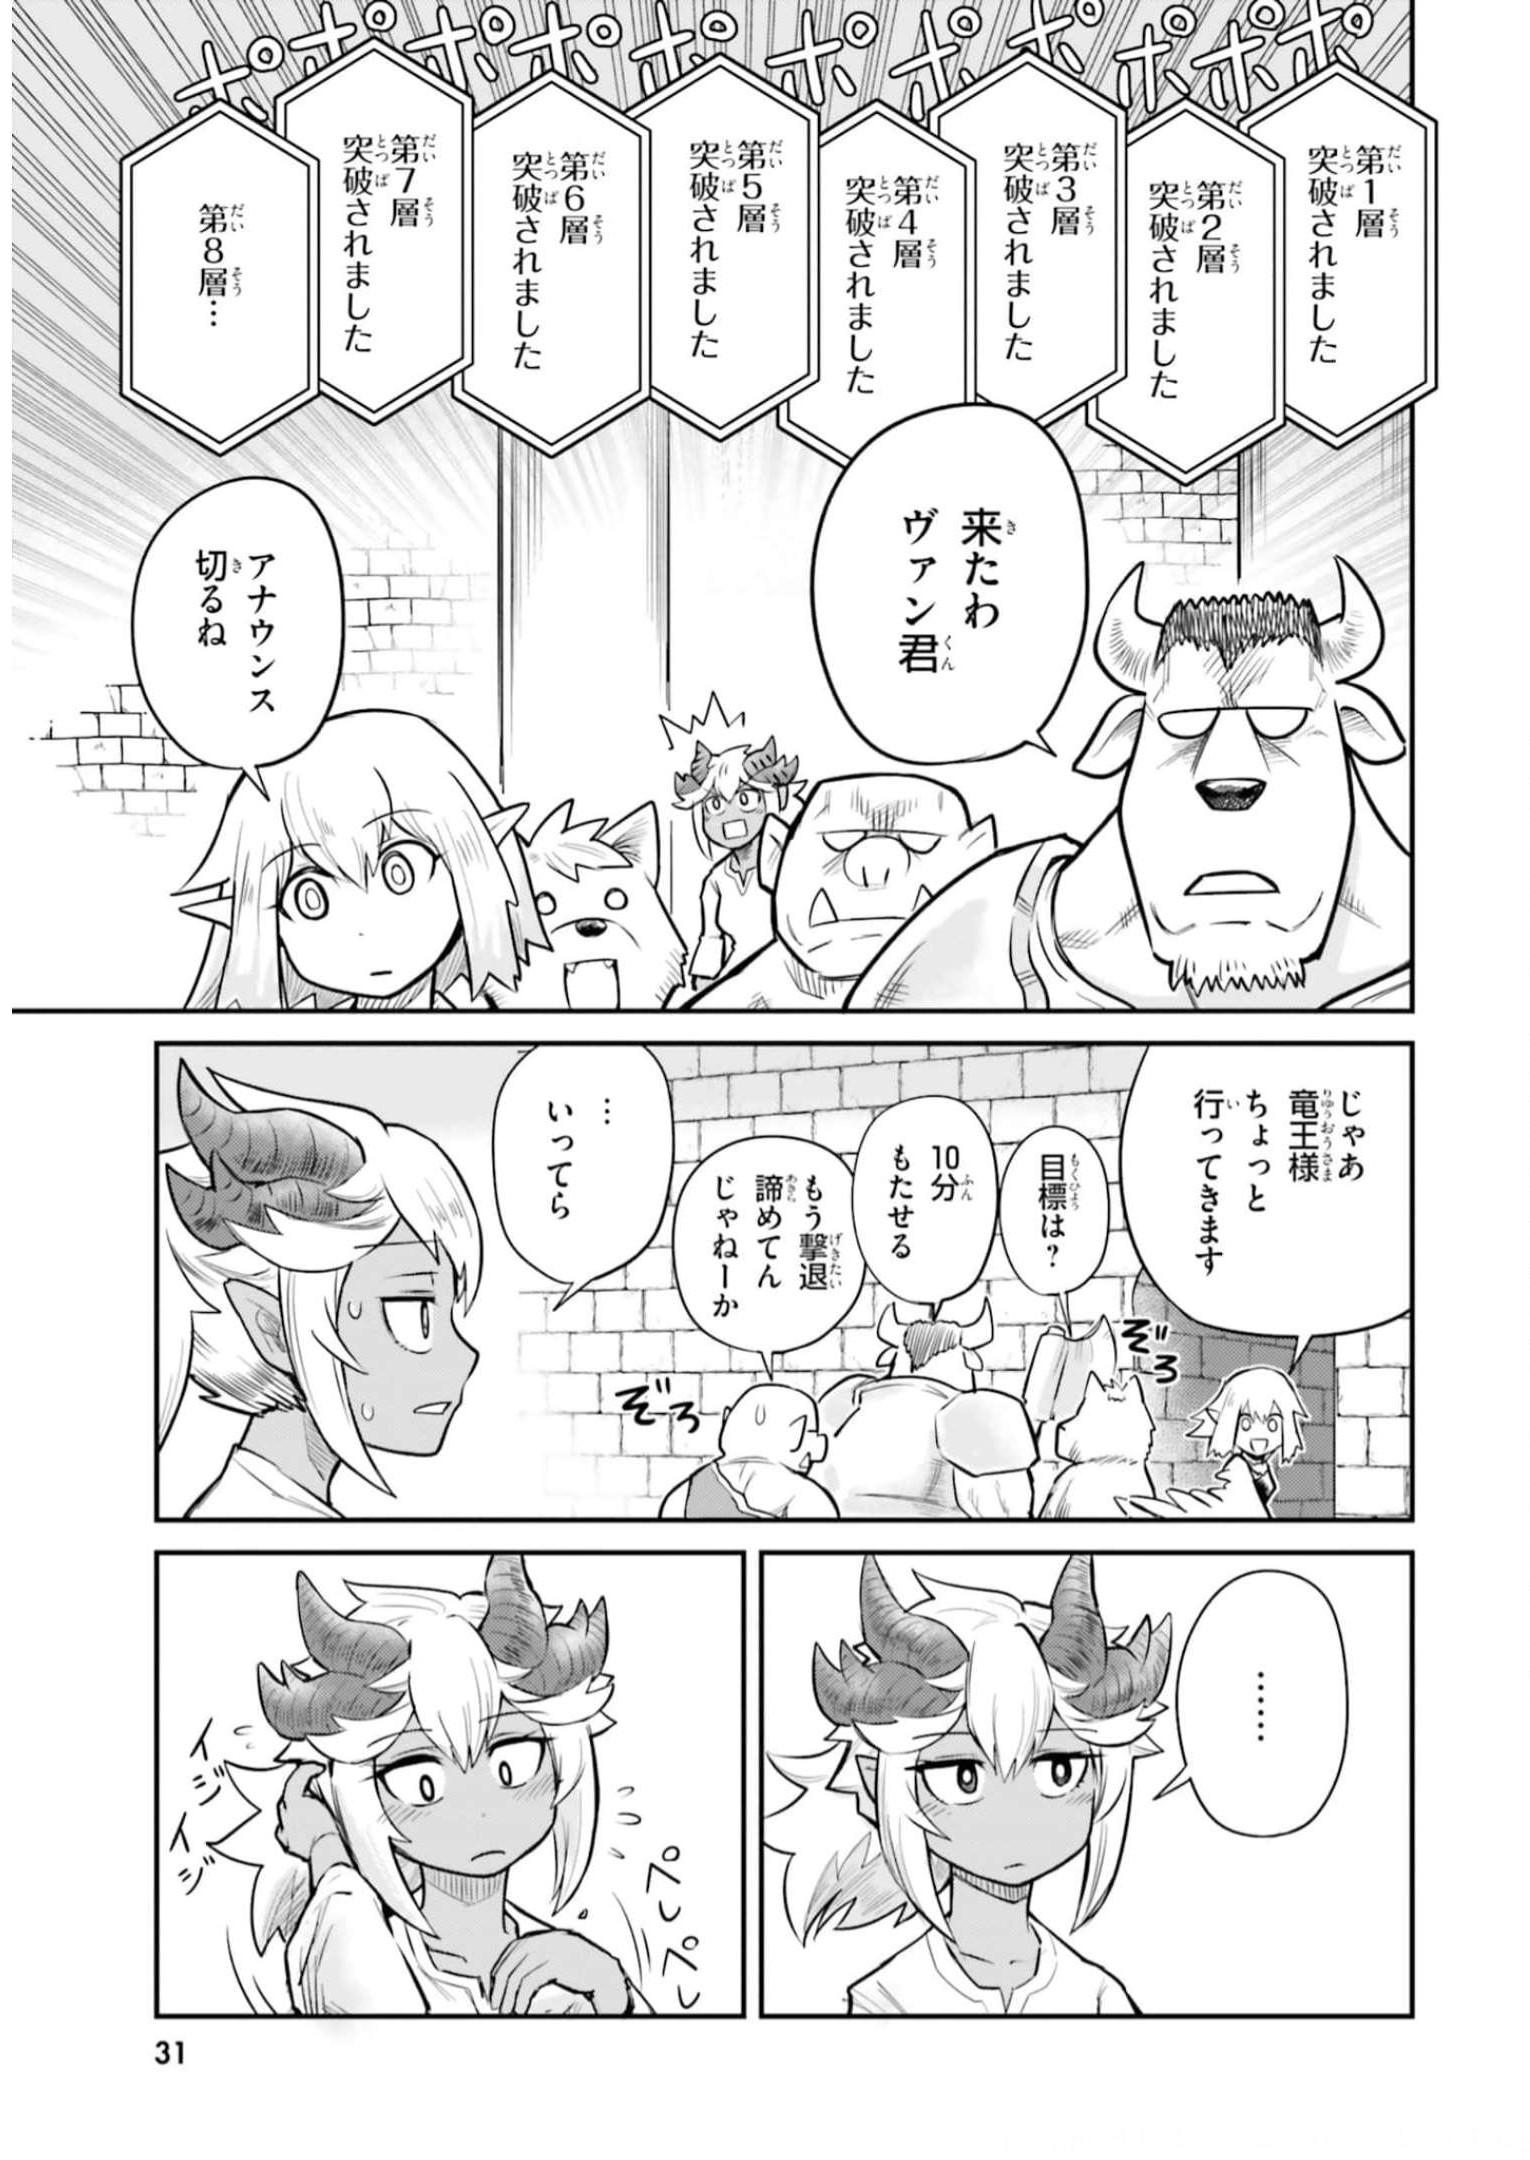 Dungeon no Osananajimi - Chapter 2 - Page 9